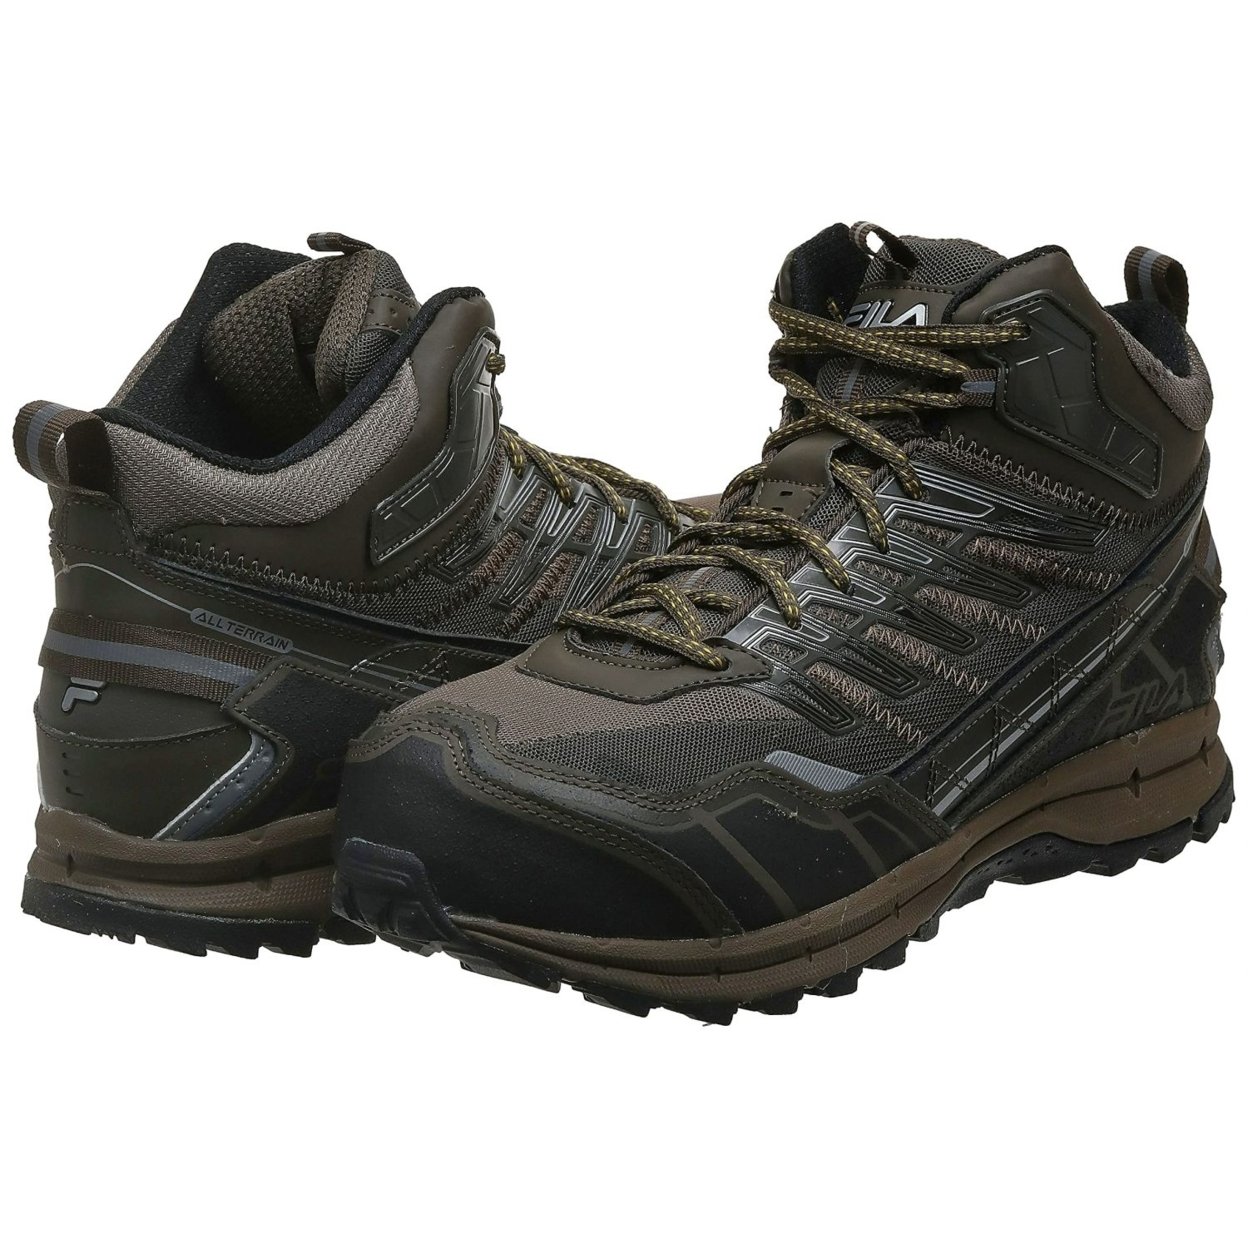 Fila Men's Hail Storm 3 Mid Composite Toe Trail Work Shoes Hiking WNUT/MBRN/GFUS - WNUT/MBRN/GFUS, 10.5